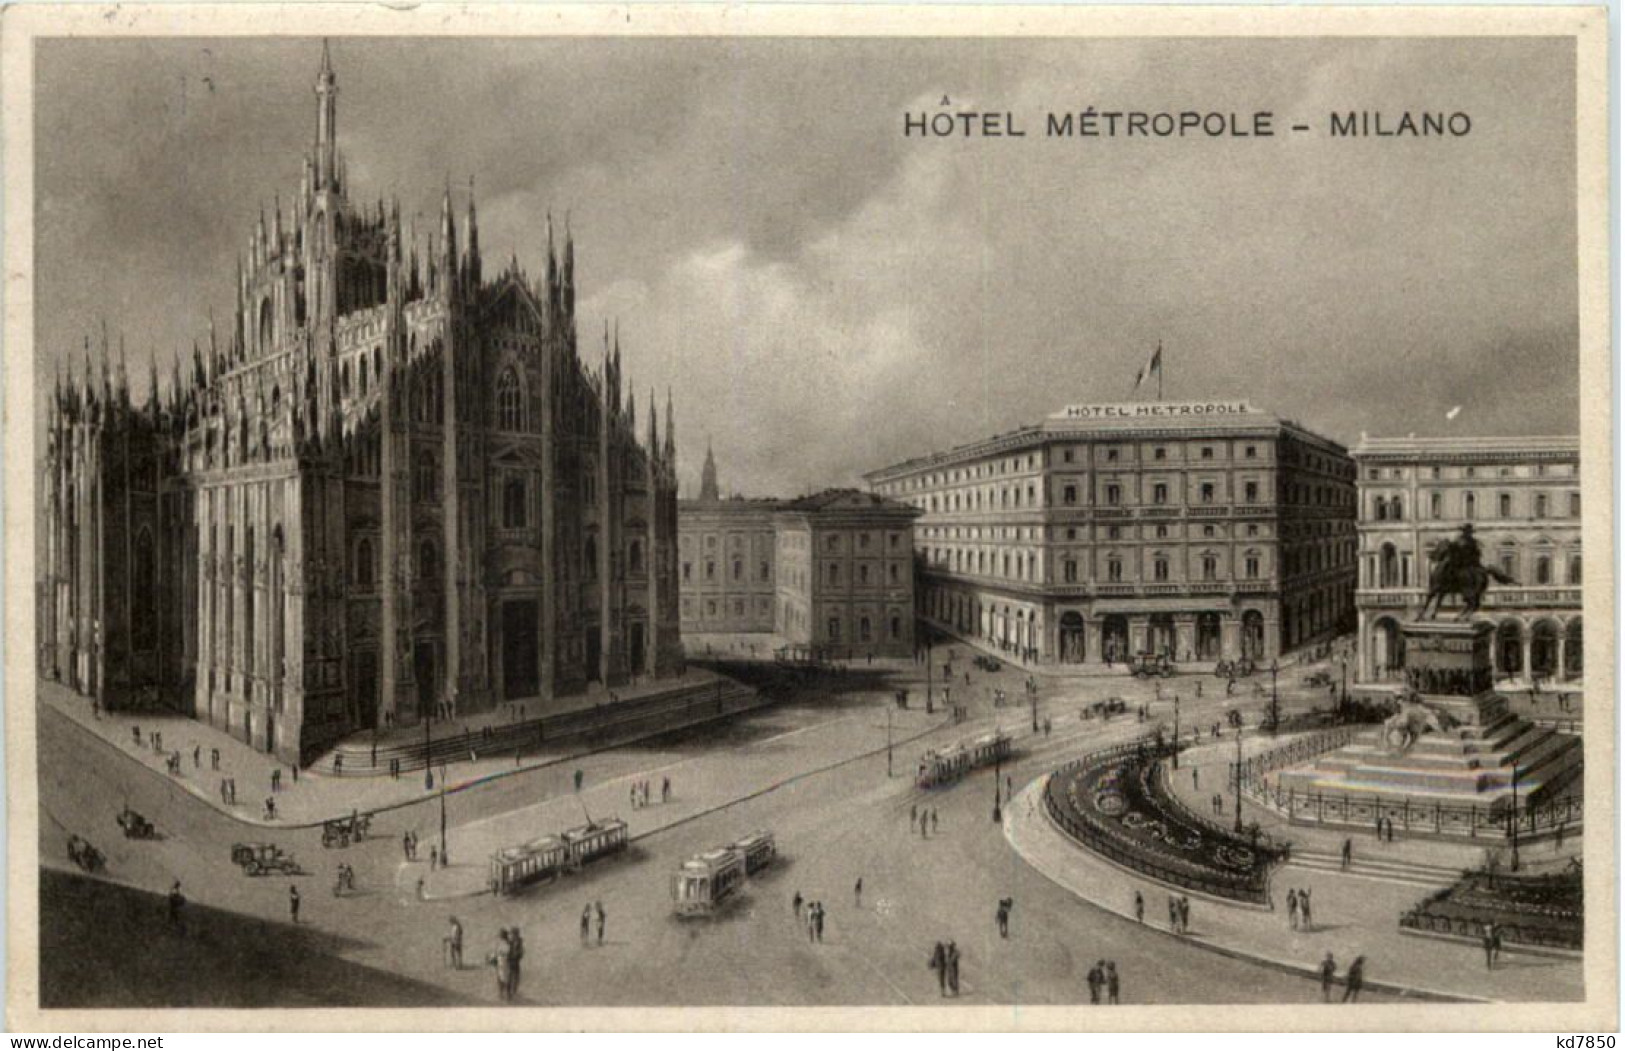 Milano - Hotel Metropole - Milano (Milan)